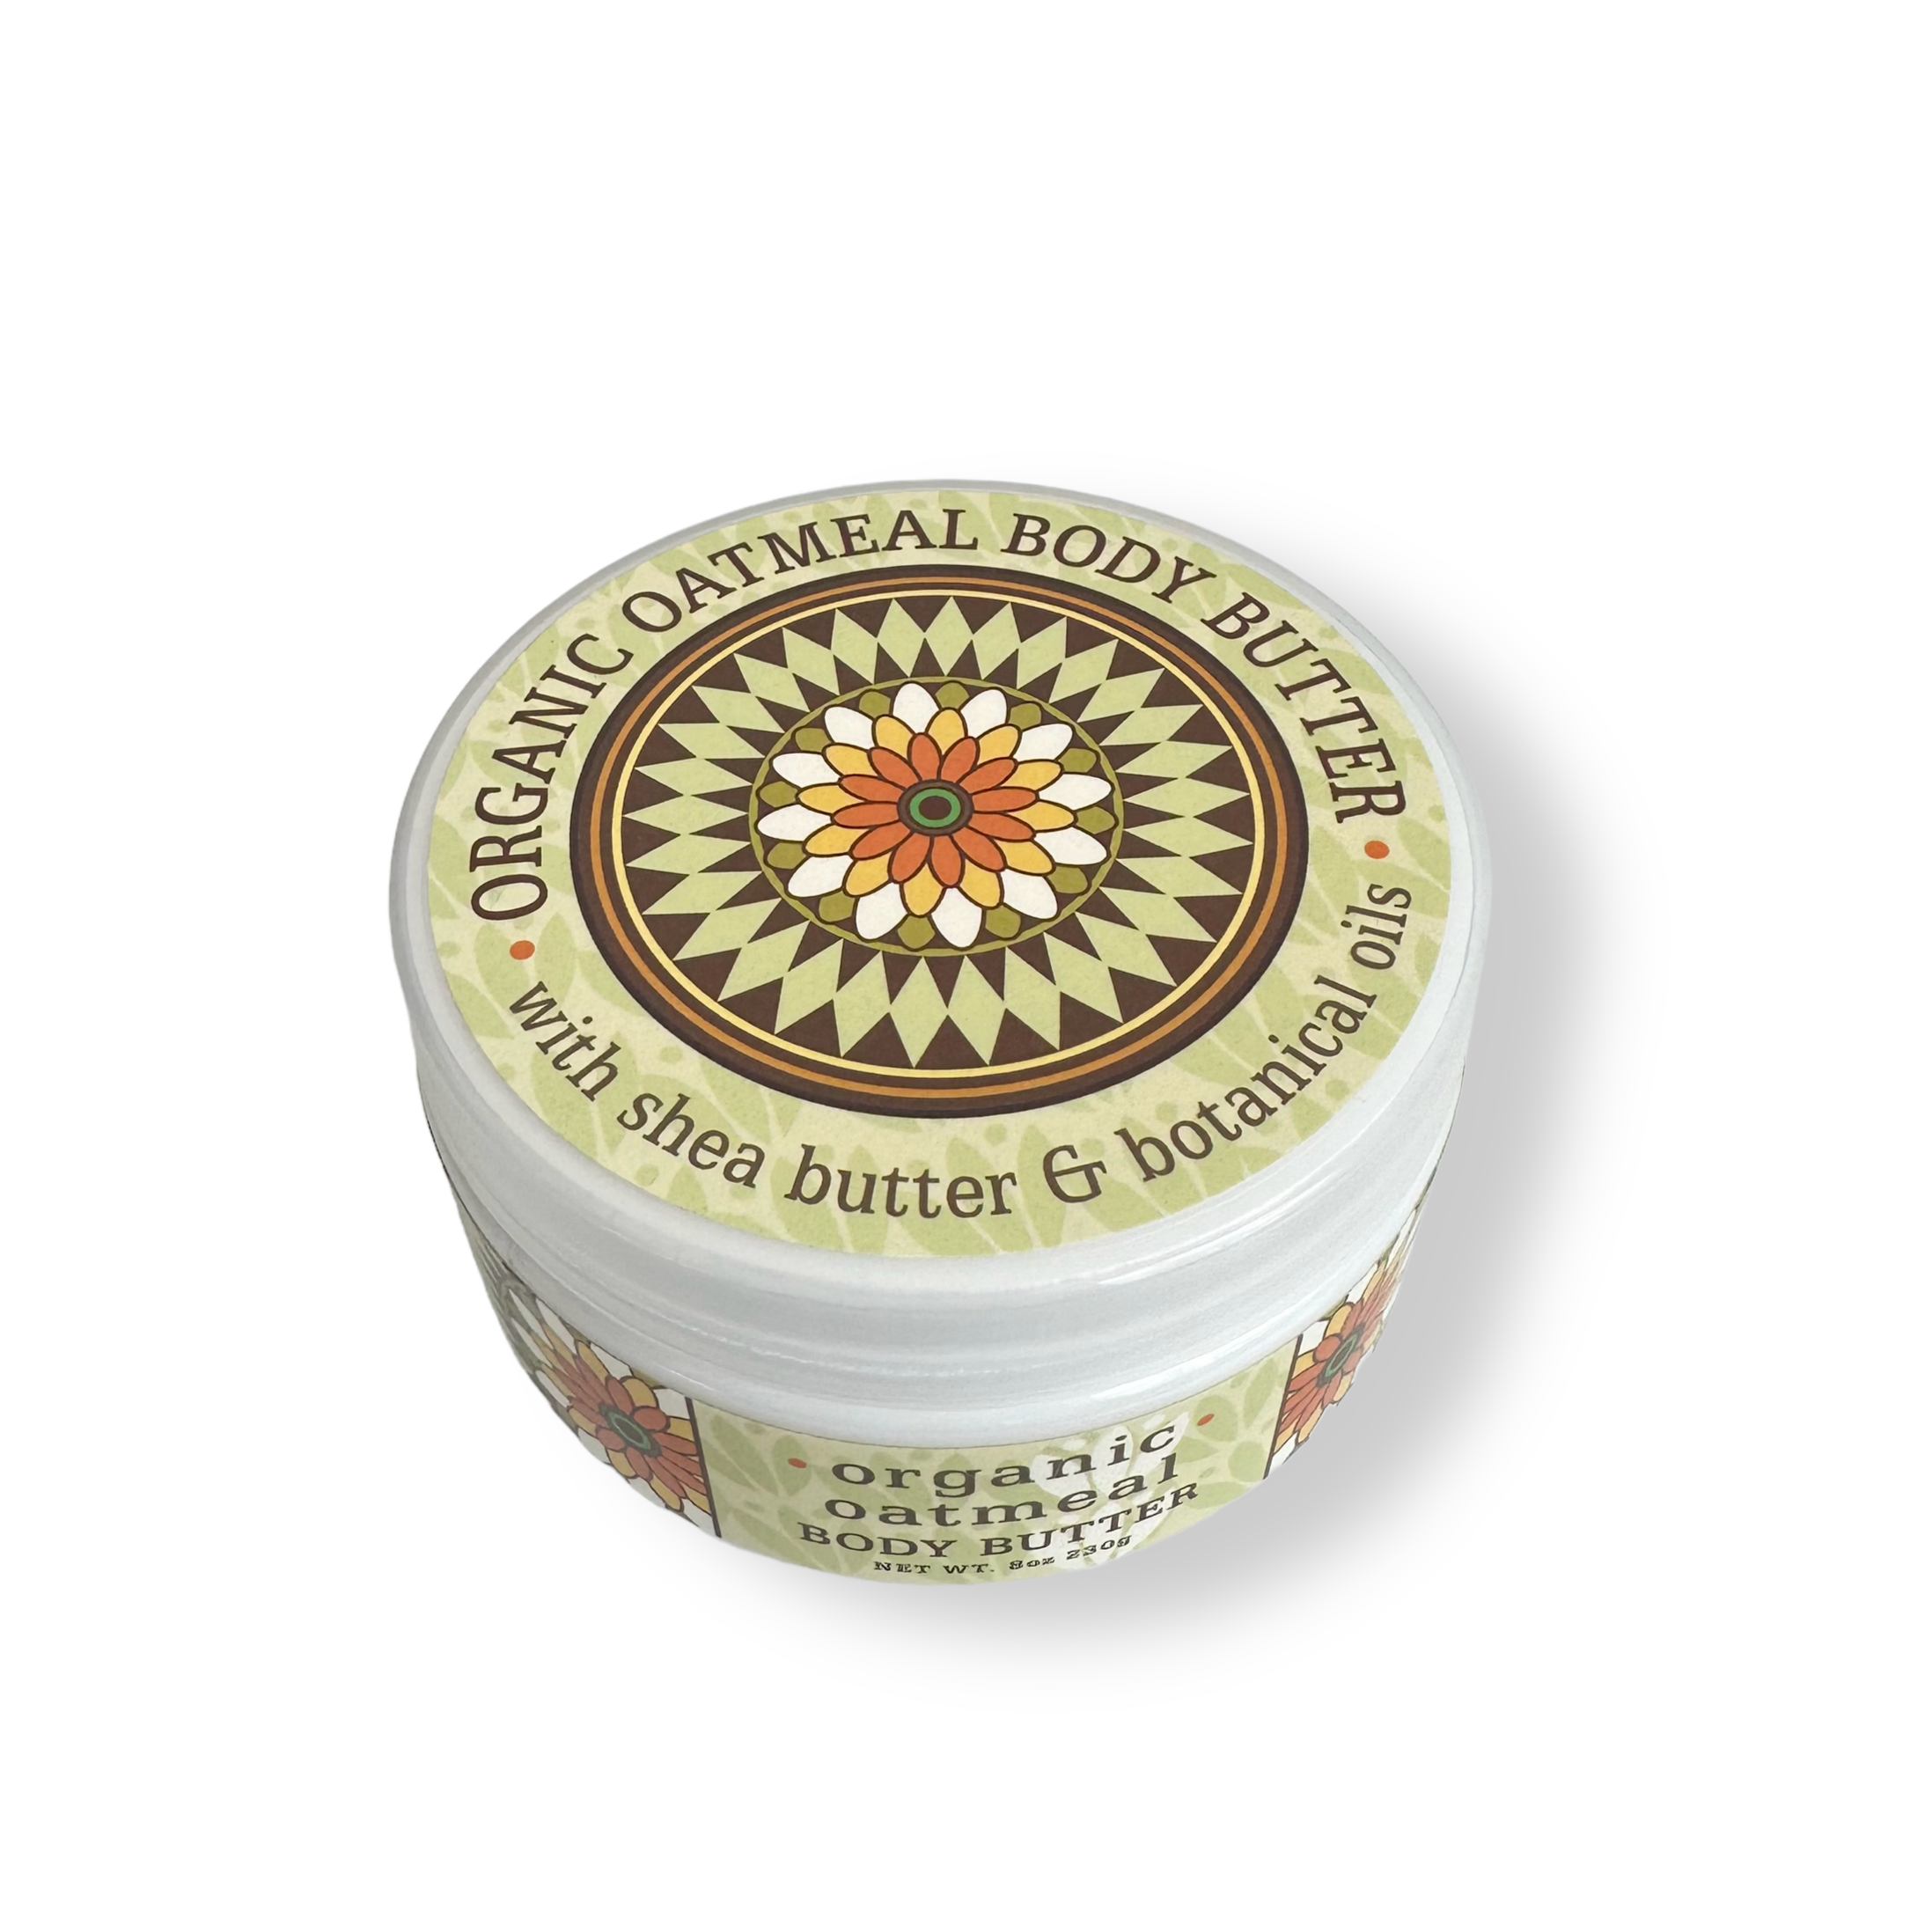 Greenwich Bay Trading Company Organic Oatmeal Body Butter